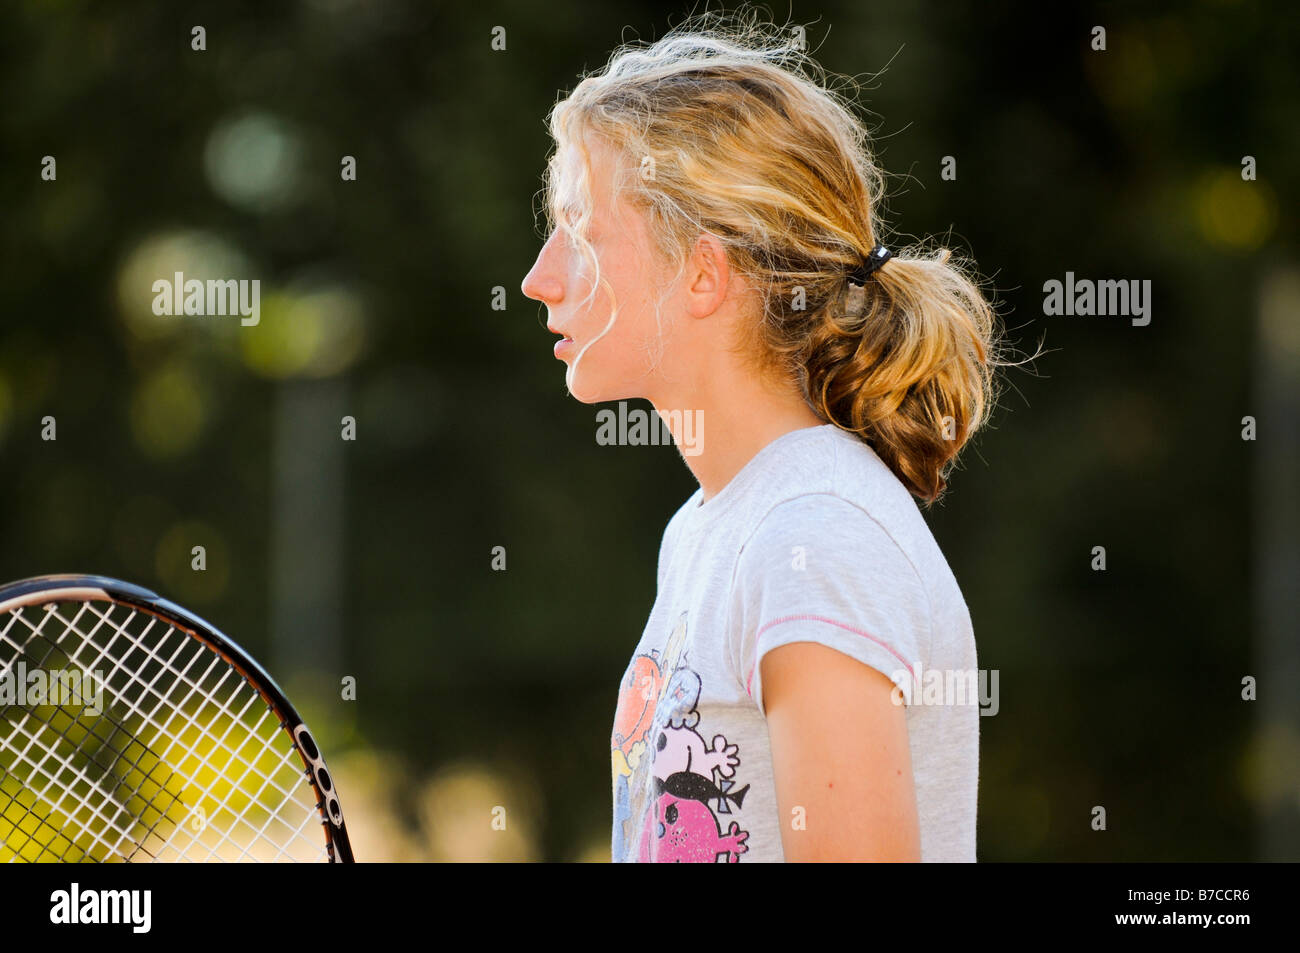 girl playing tennis Stock Photo